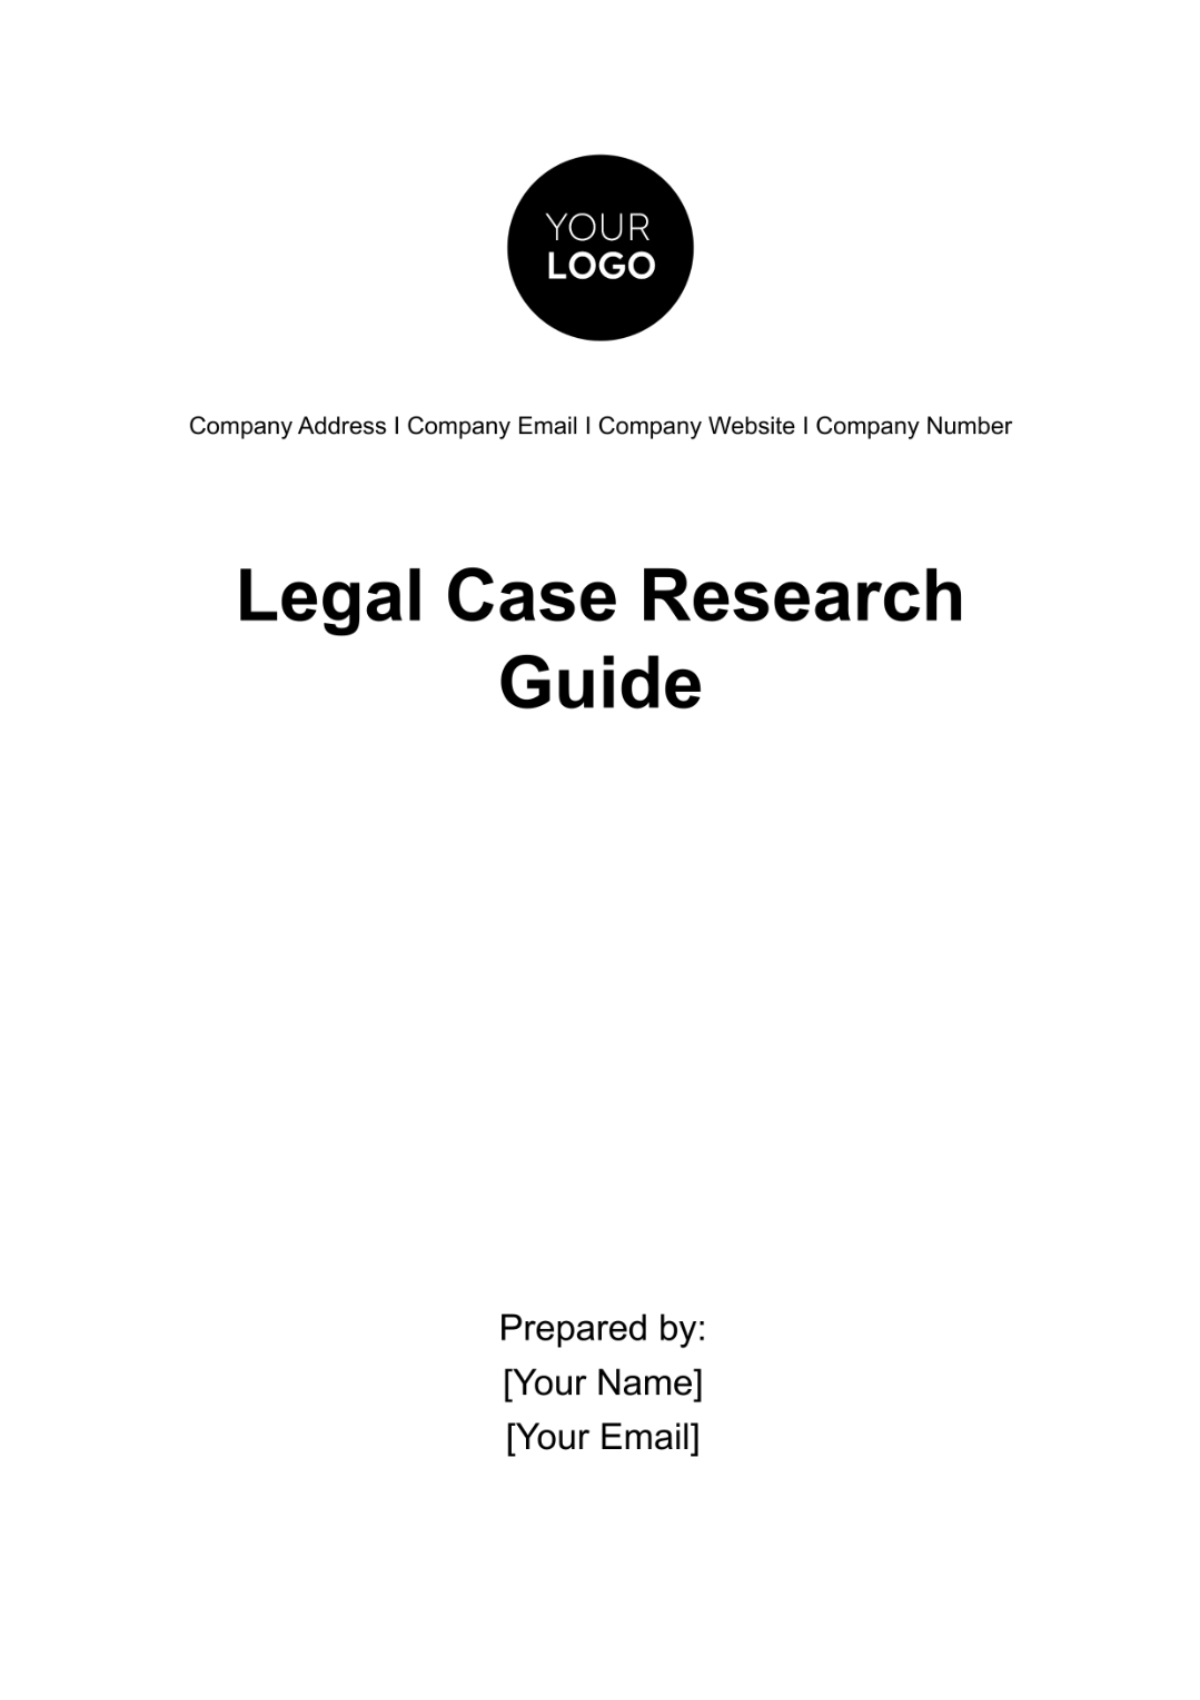 Legal Case Research Guide Template